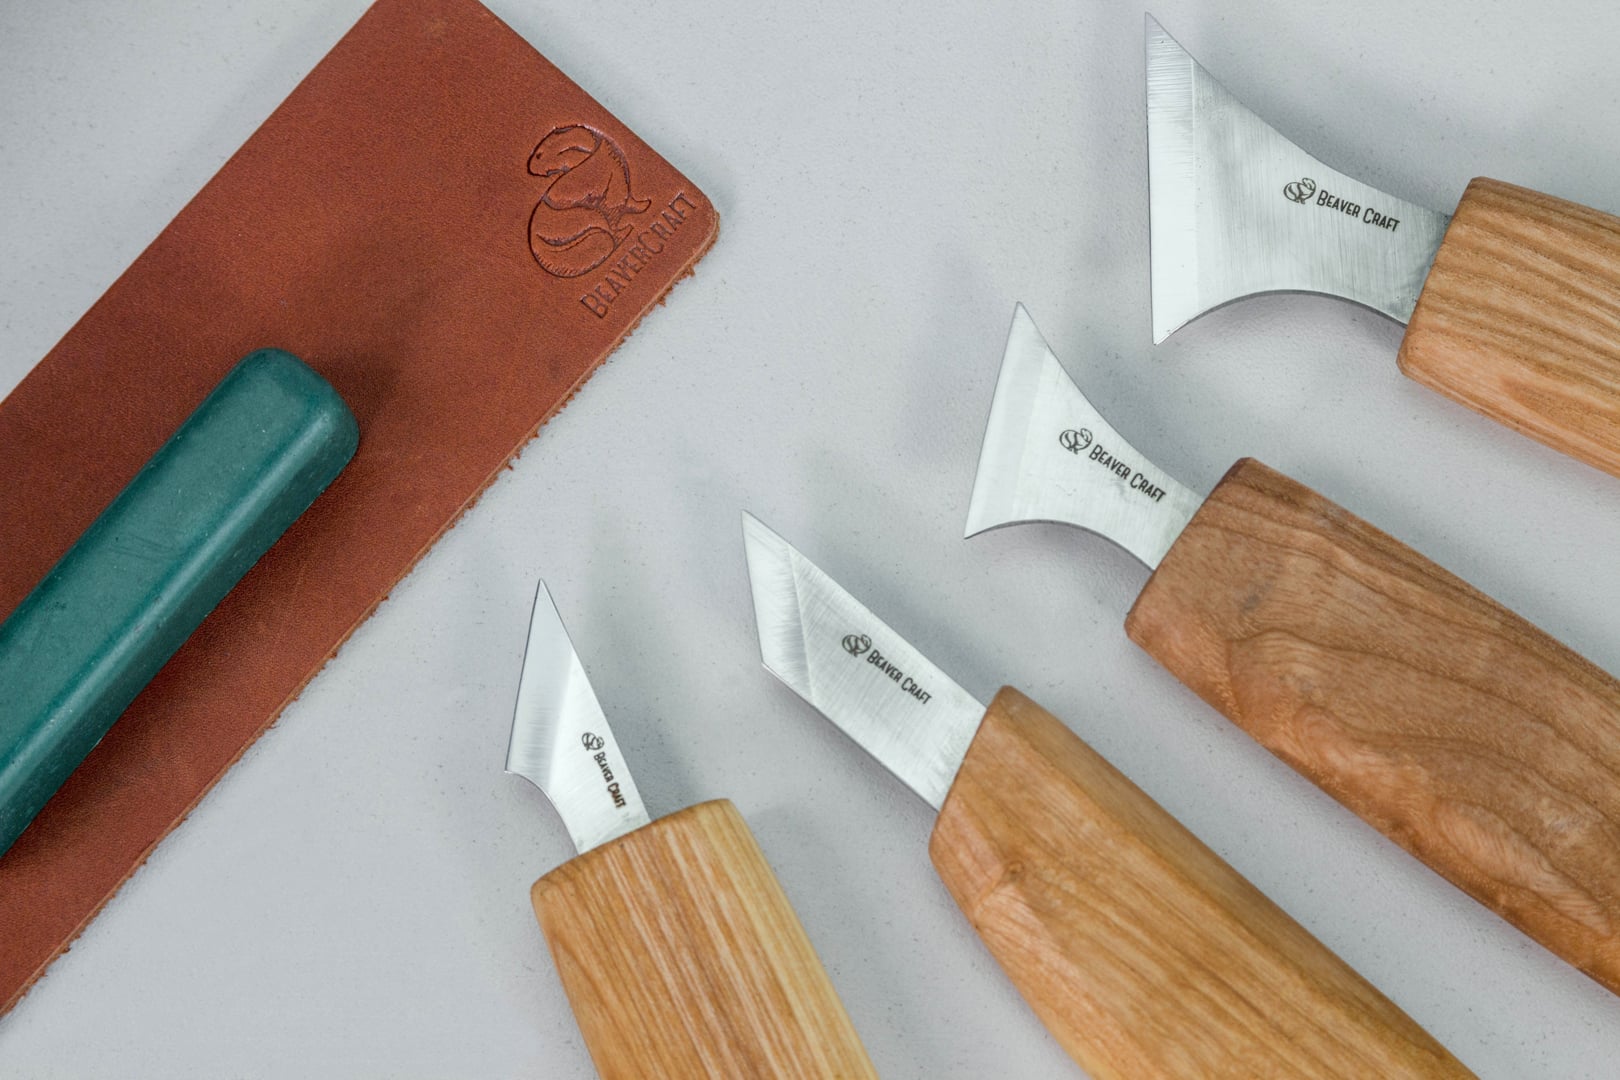 BeaverCraft Chip Wood Carving Knives Set 49-S05